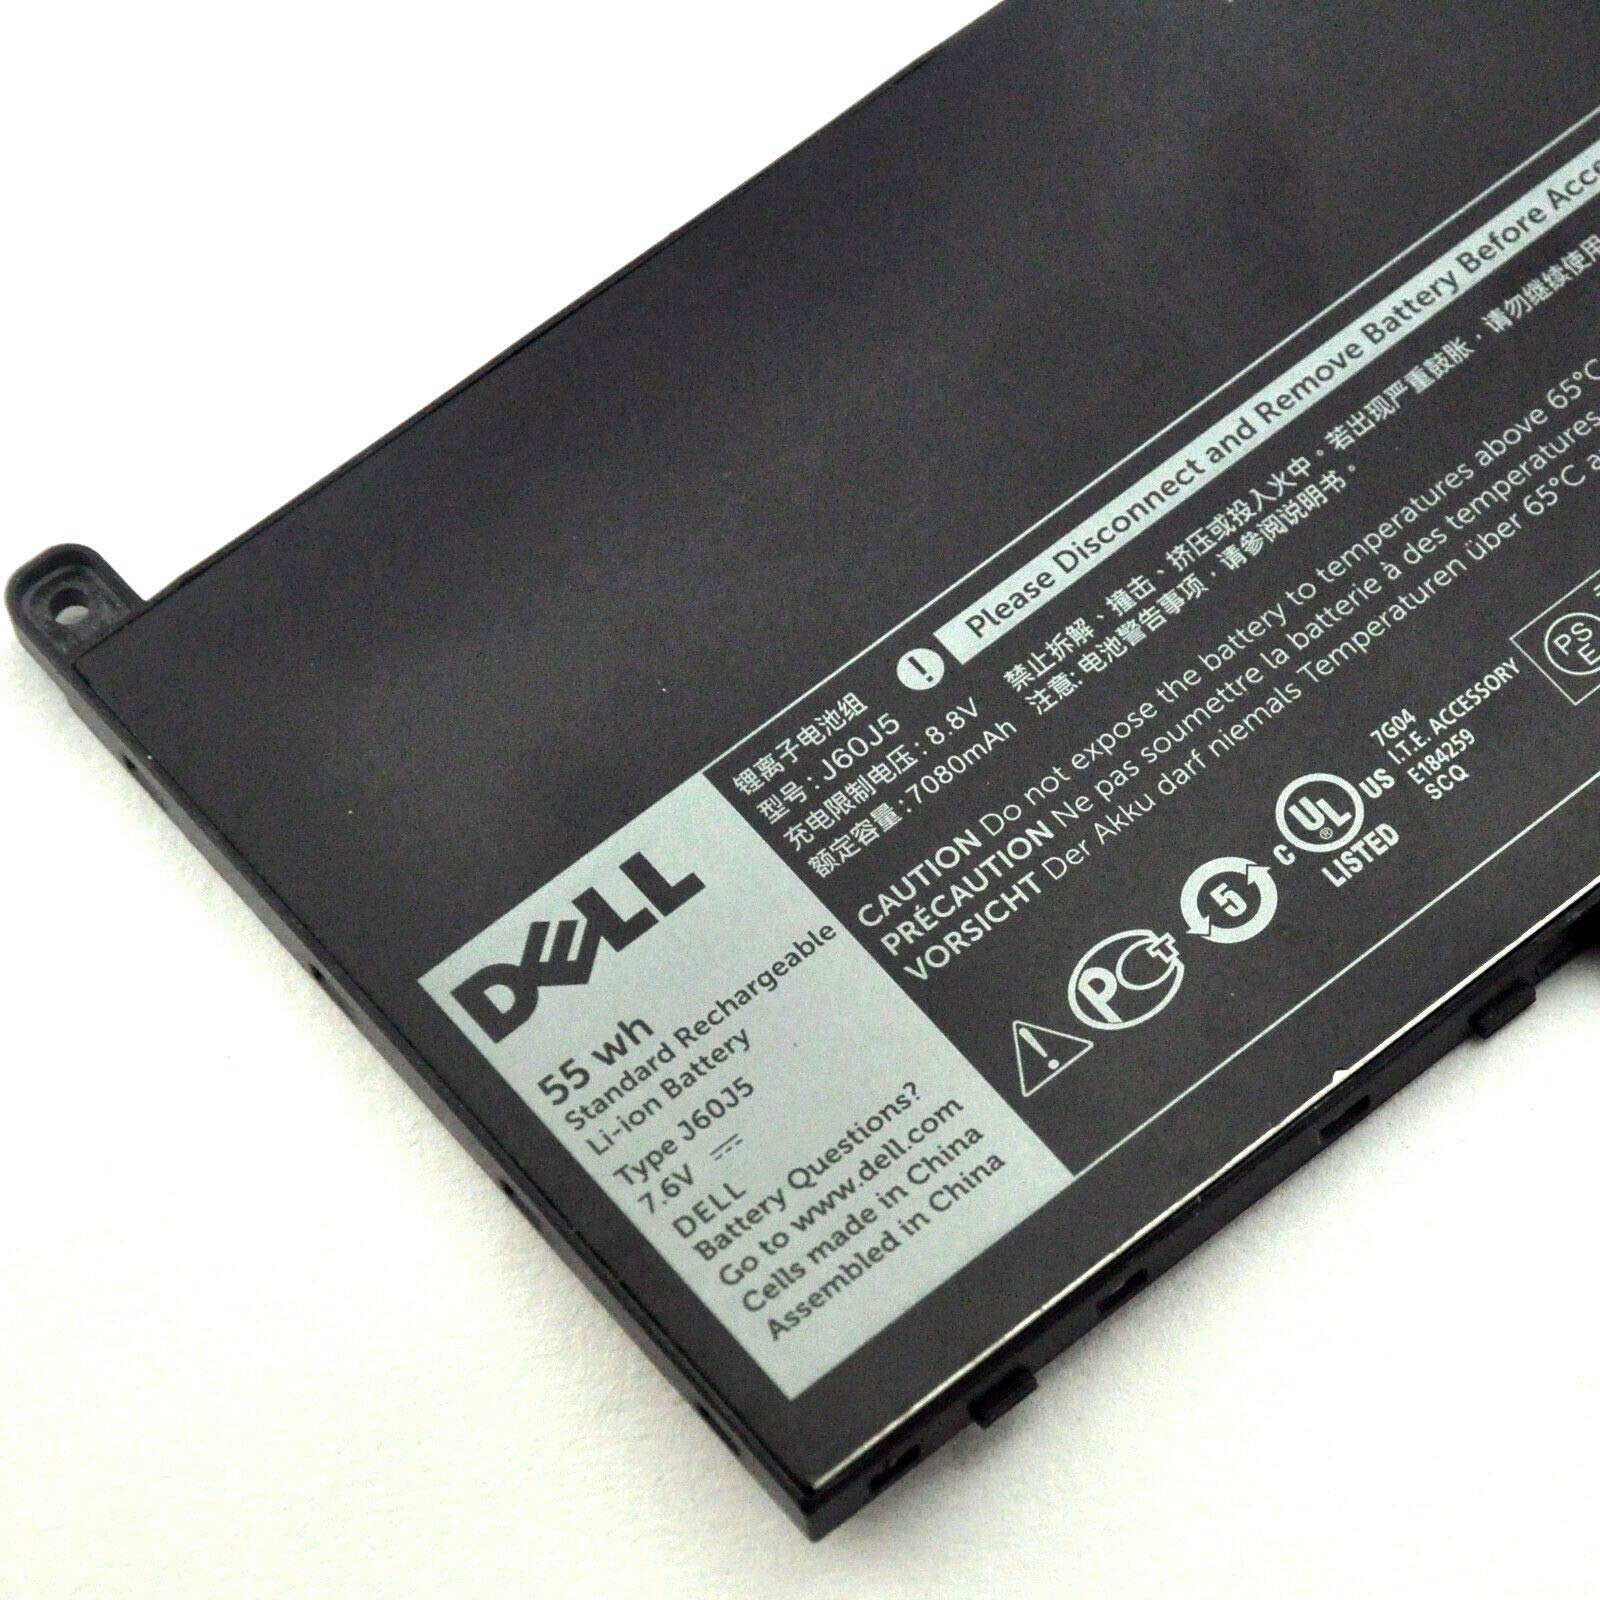 Mua Genuine Dell Built-in Battery for Latitude E7270  E7470 - Type J60J5  7.6V 55WH trên Amazon Mỹ chính hãng 2022 | Fado